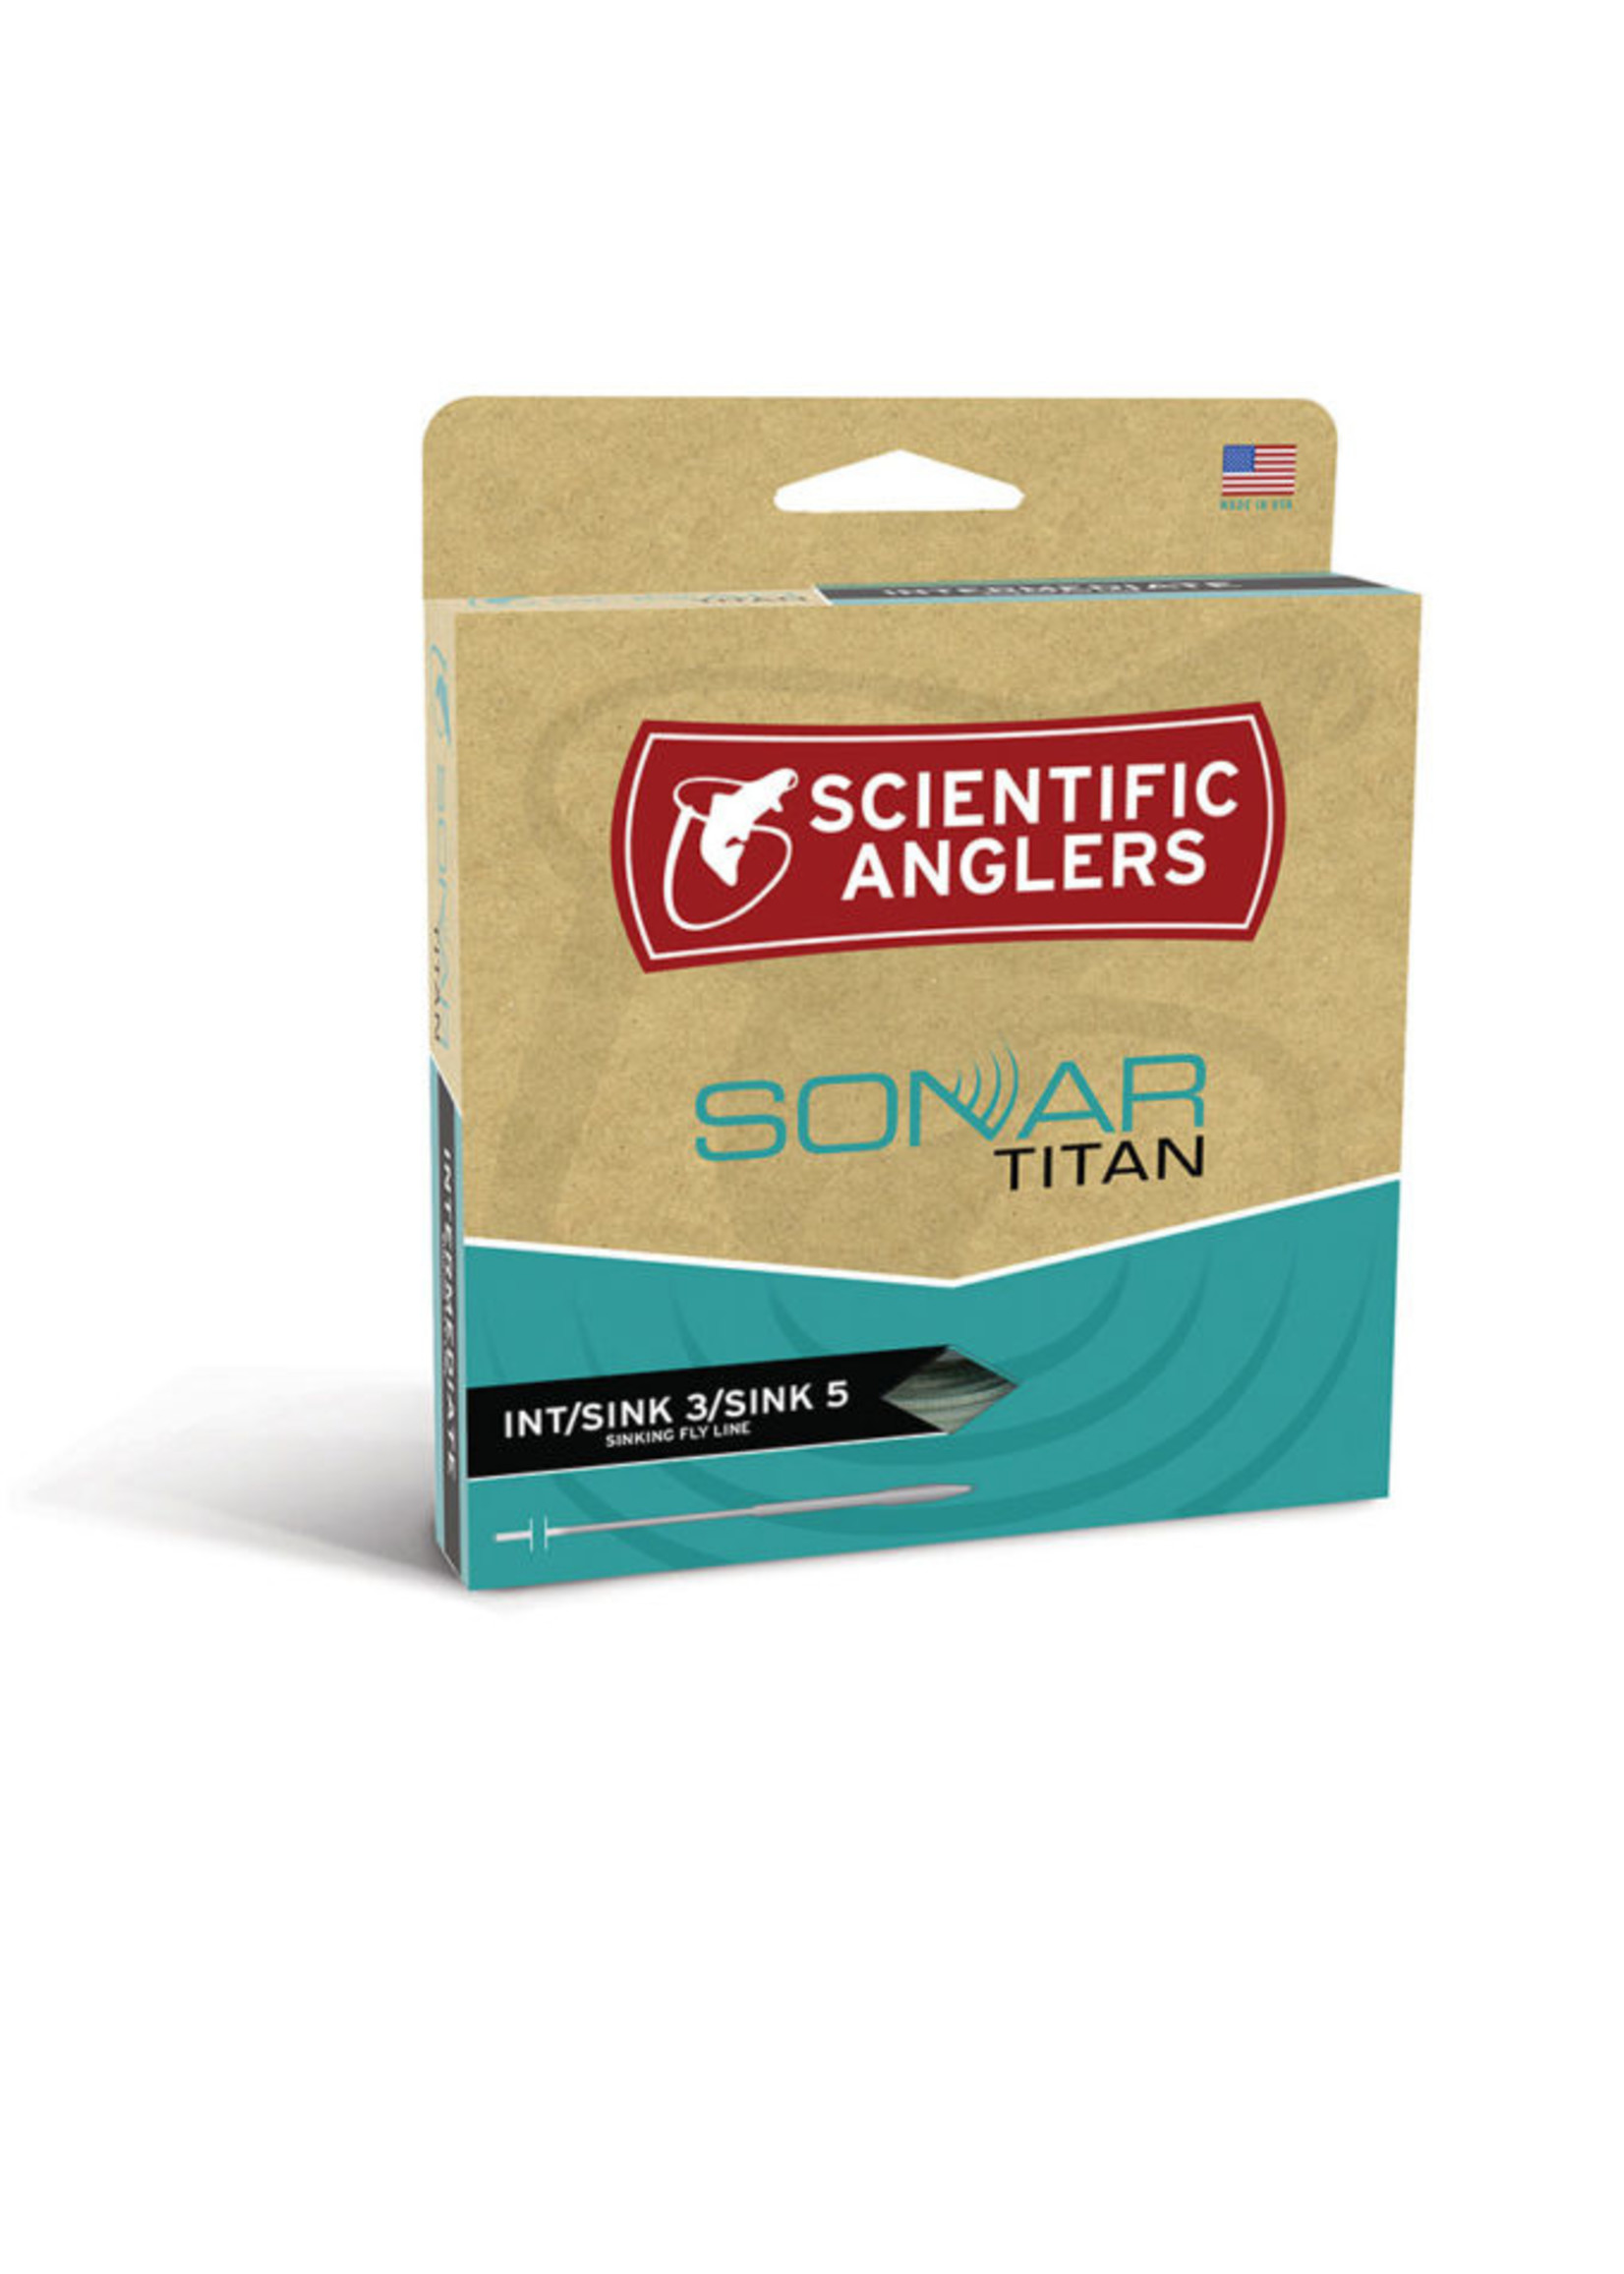 Scientific Anglers Scientific Anglers Sonar Titan Triple Density Fly Line